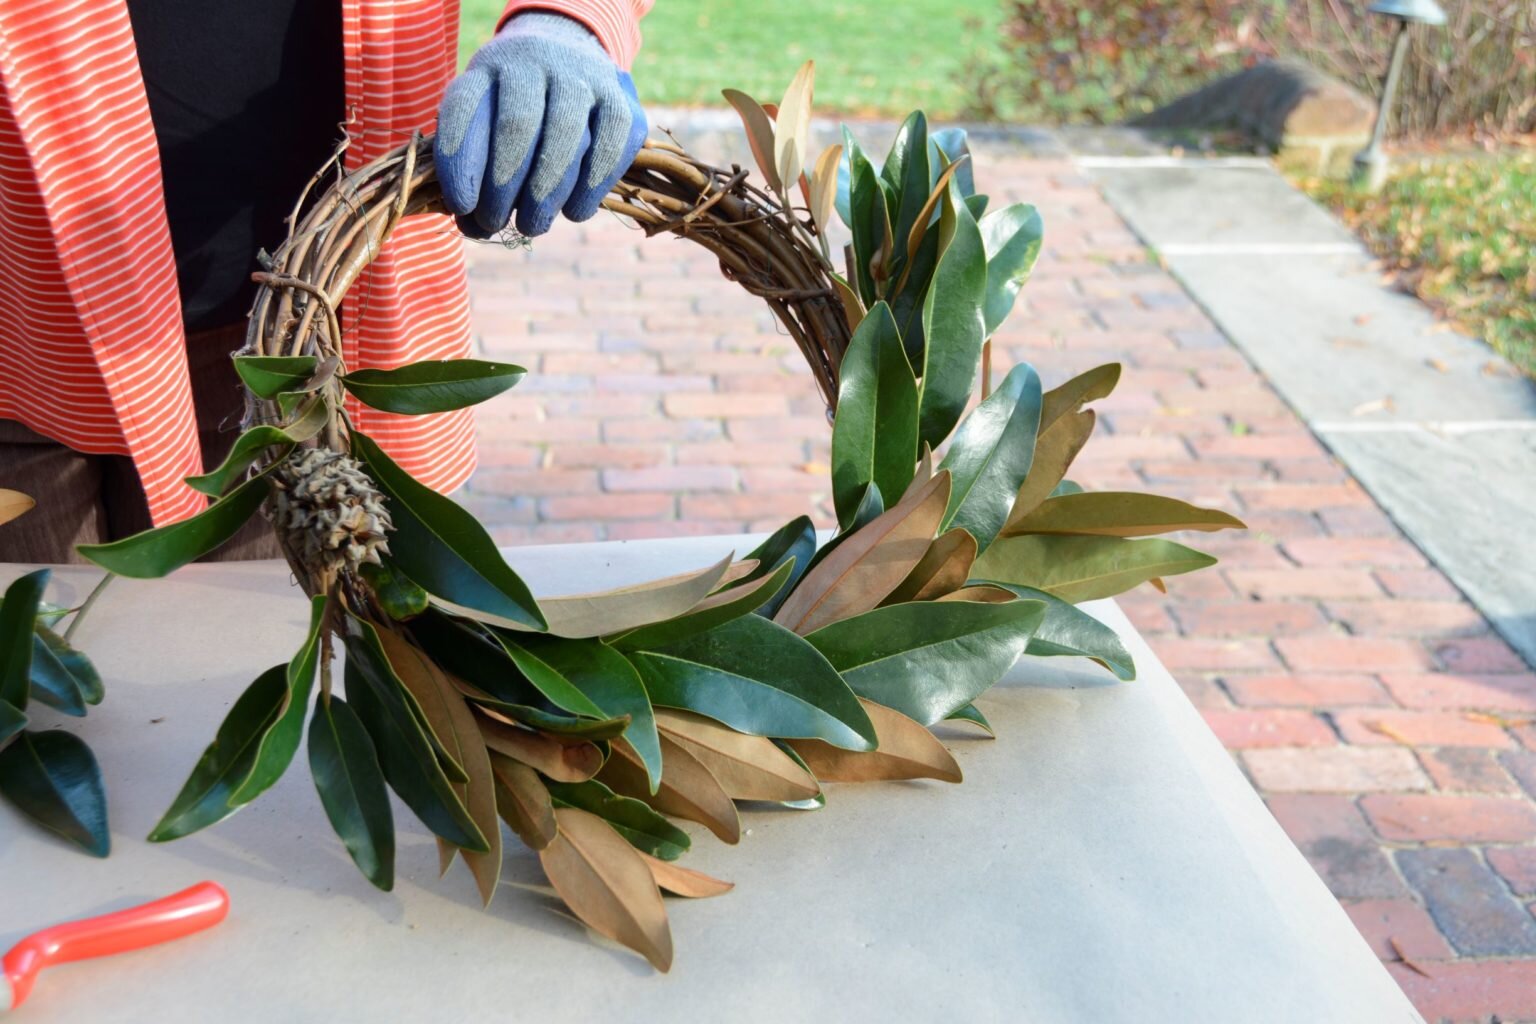 Creating-a-magnolia-wreath_67836-1536x1024.jpg